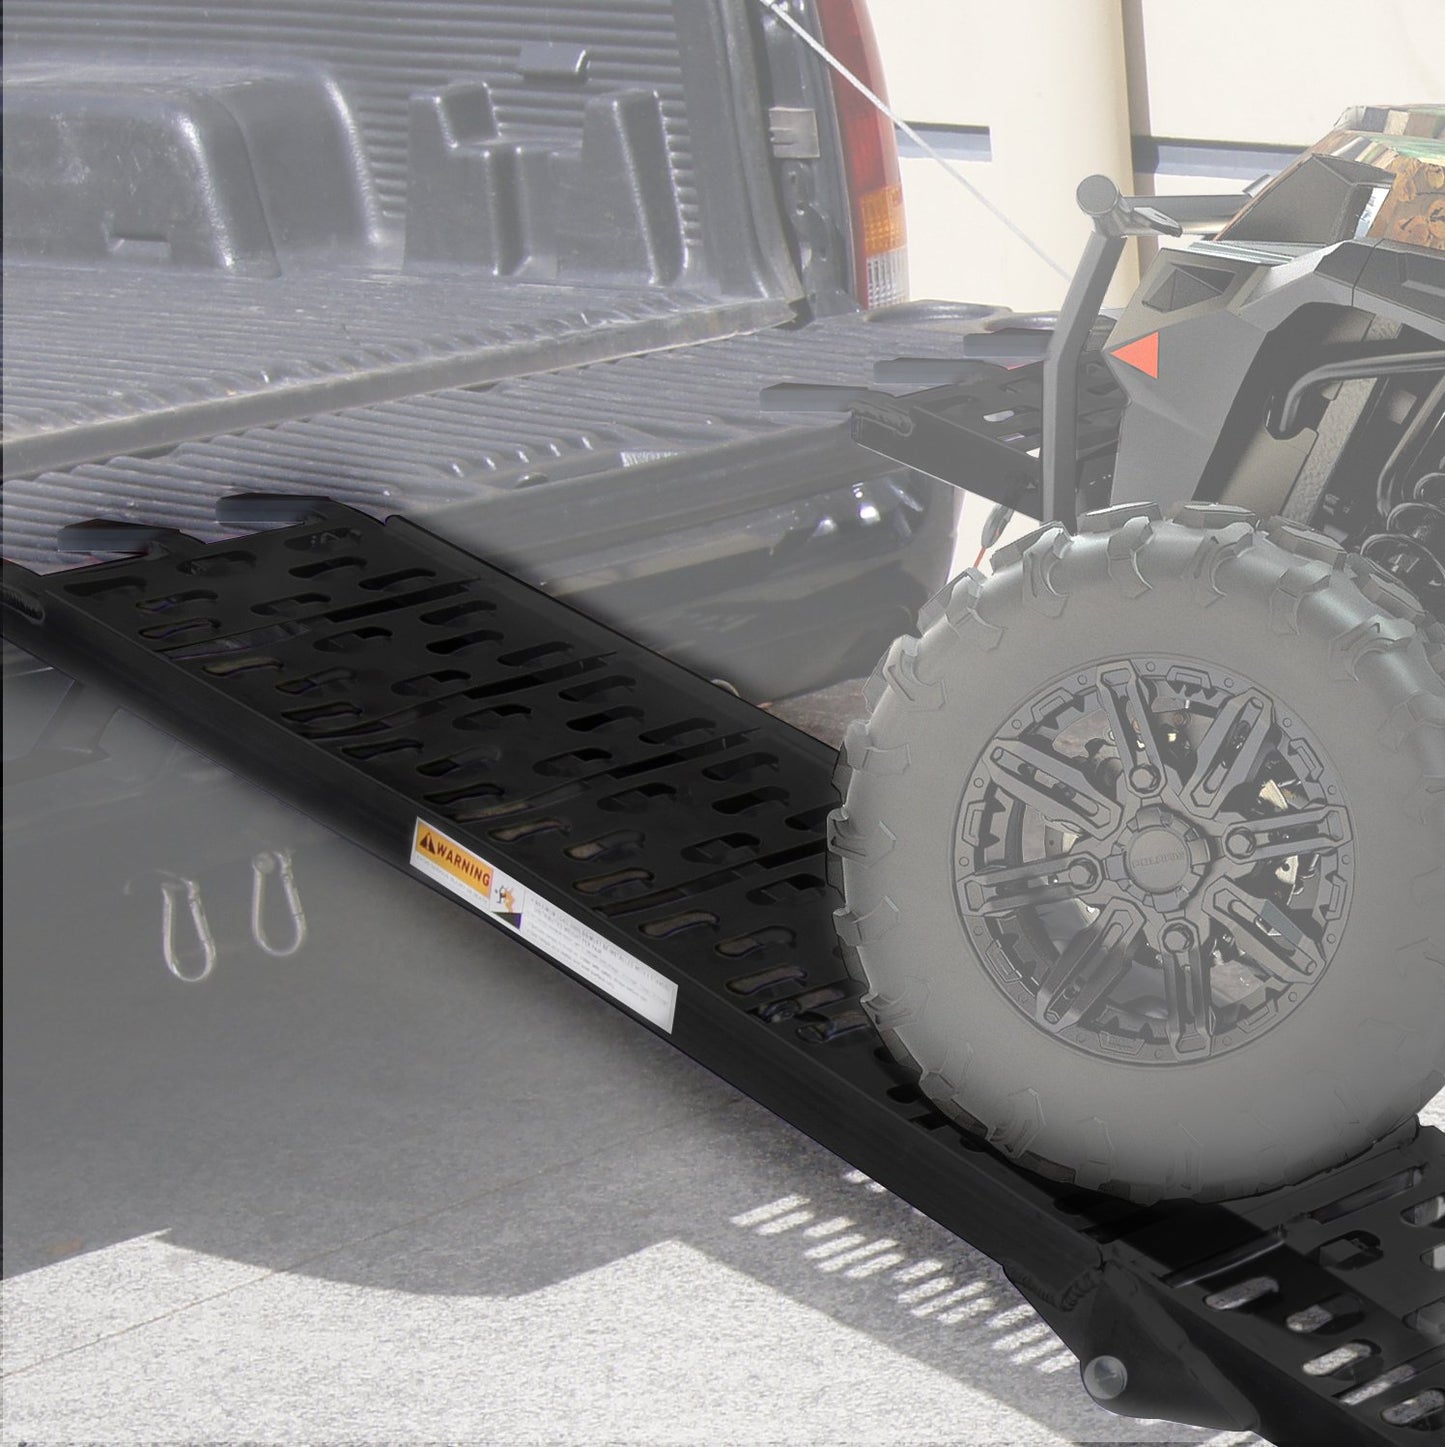 Aluminium ATV Loading Ramp Foldable - Black